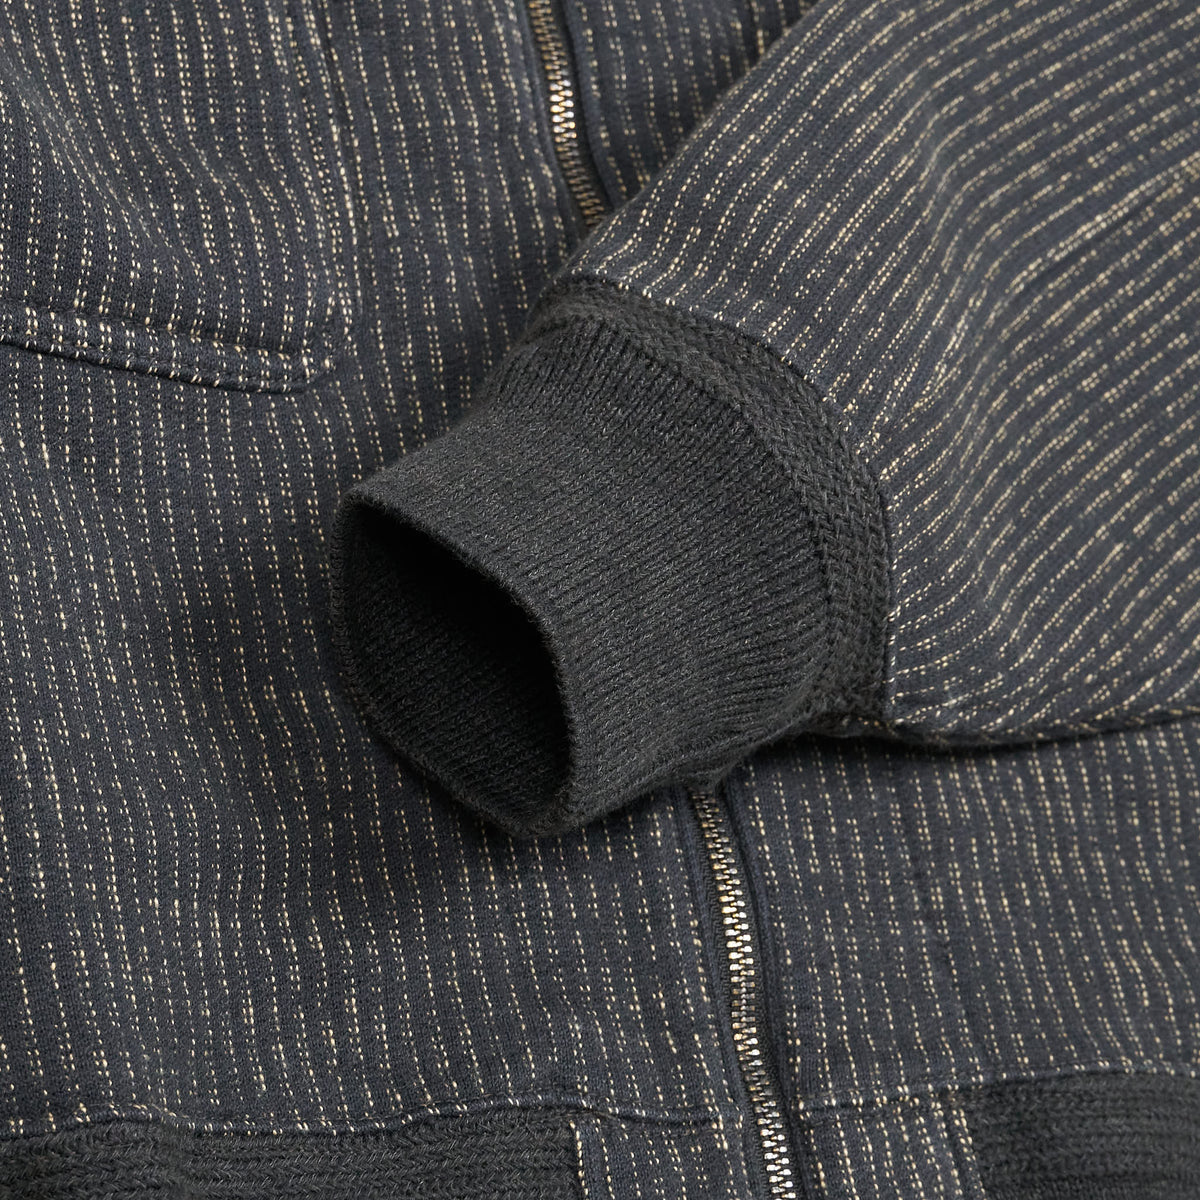 Double RL Striped Cotton Blend Fleece Jacket